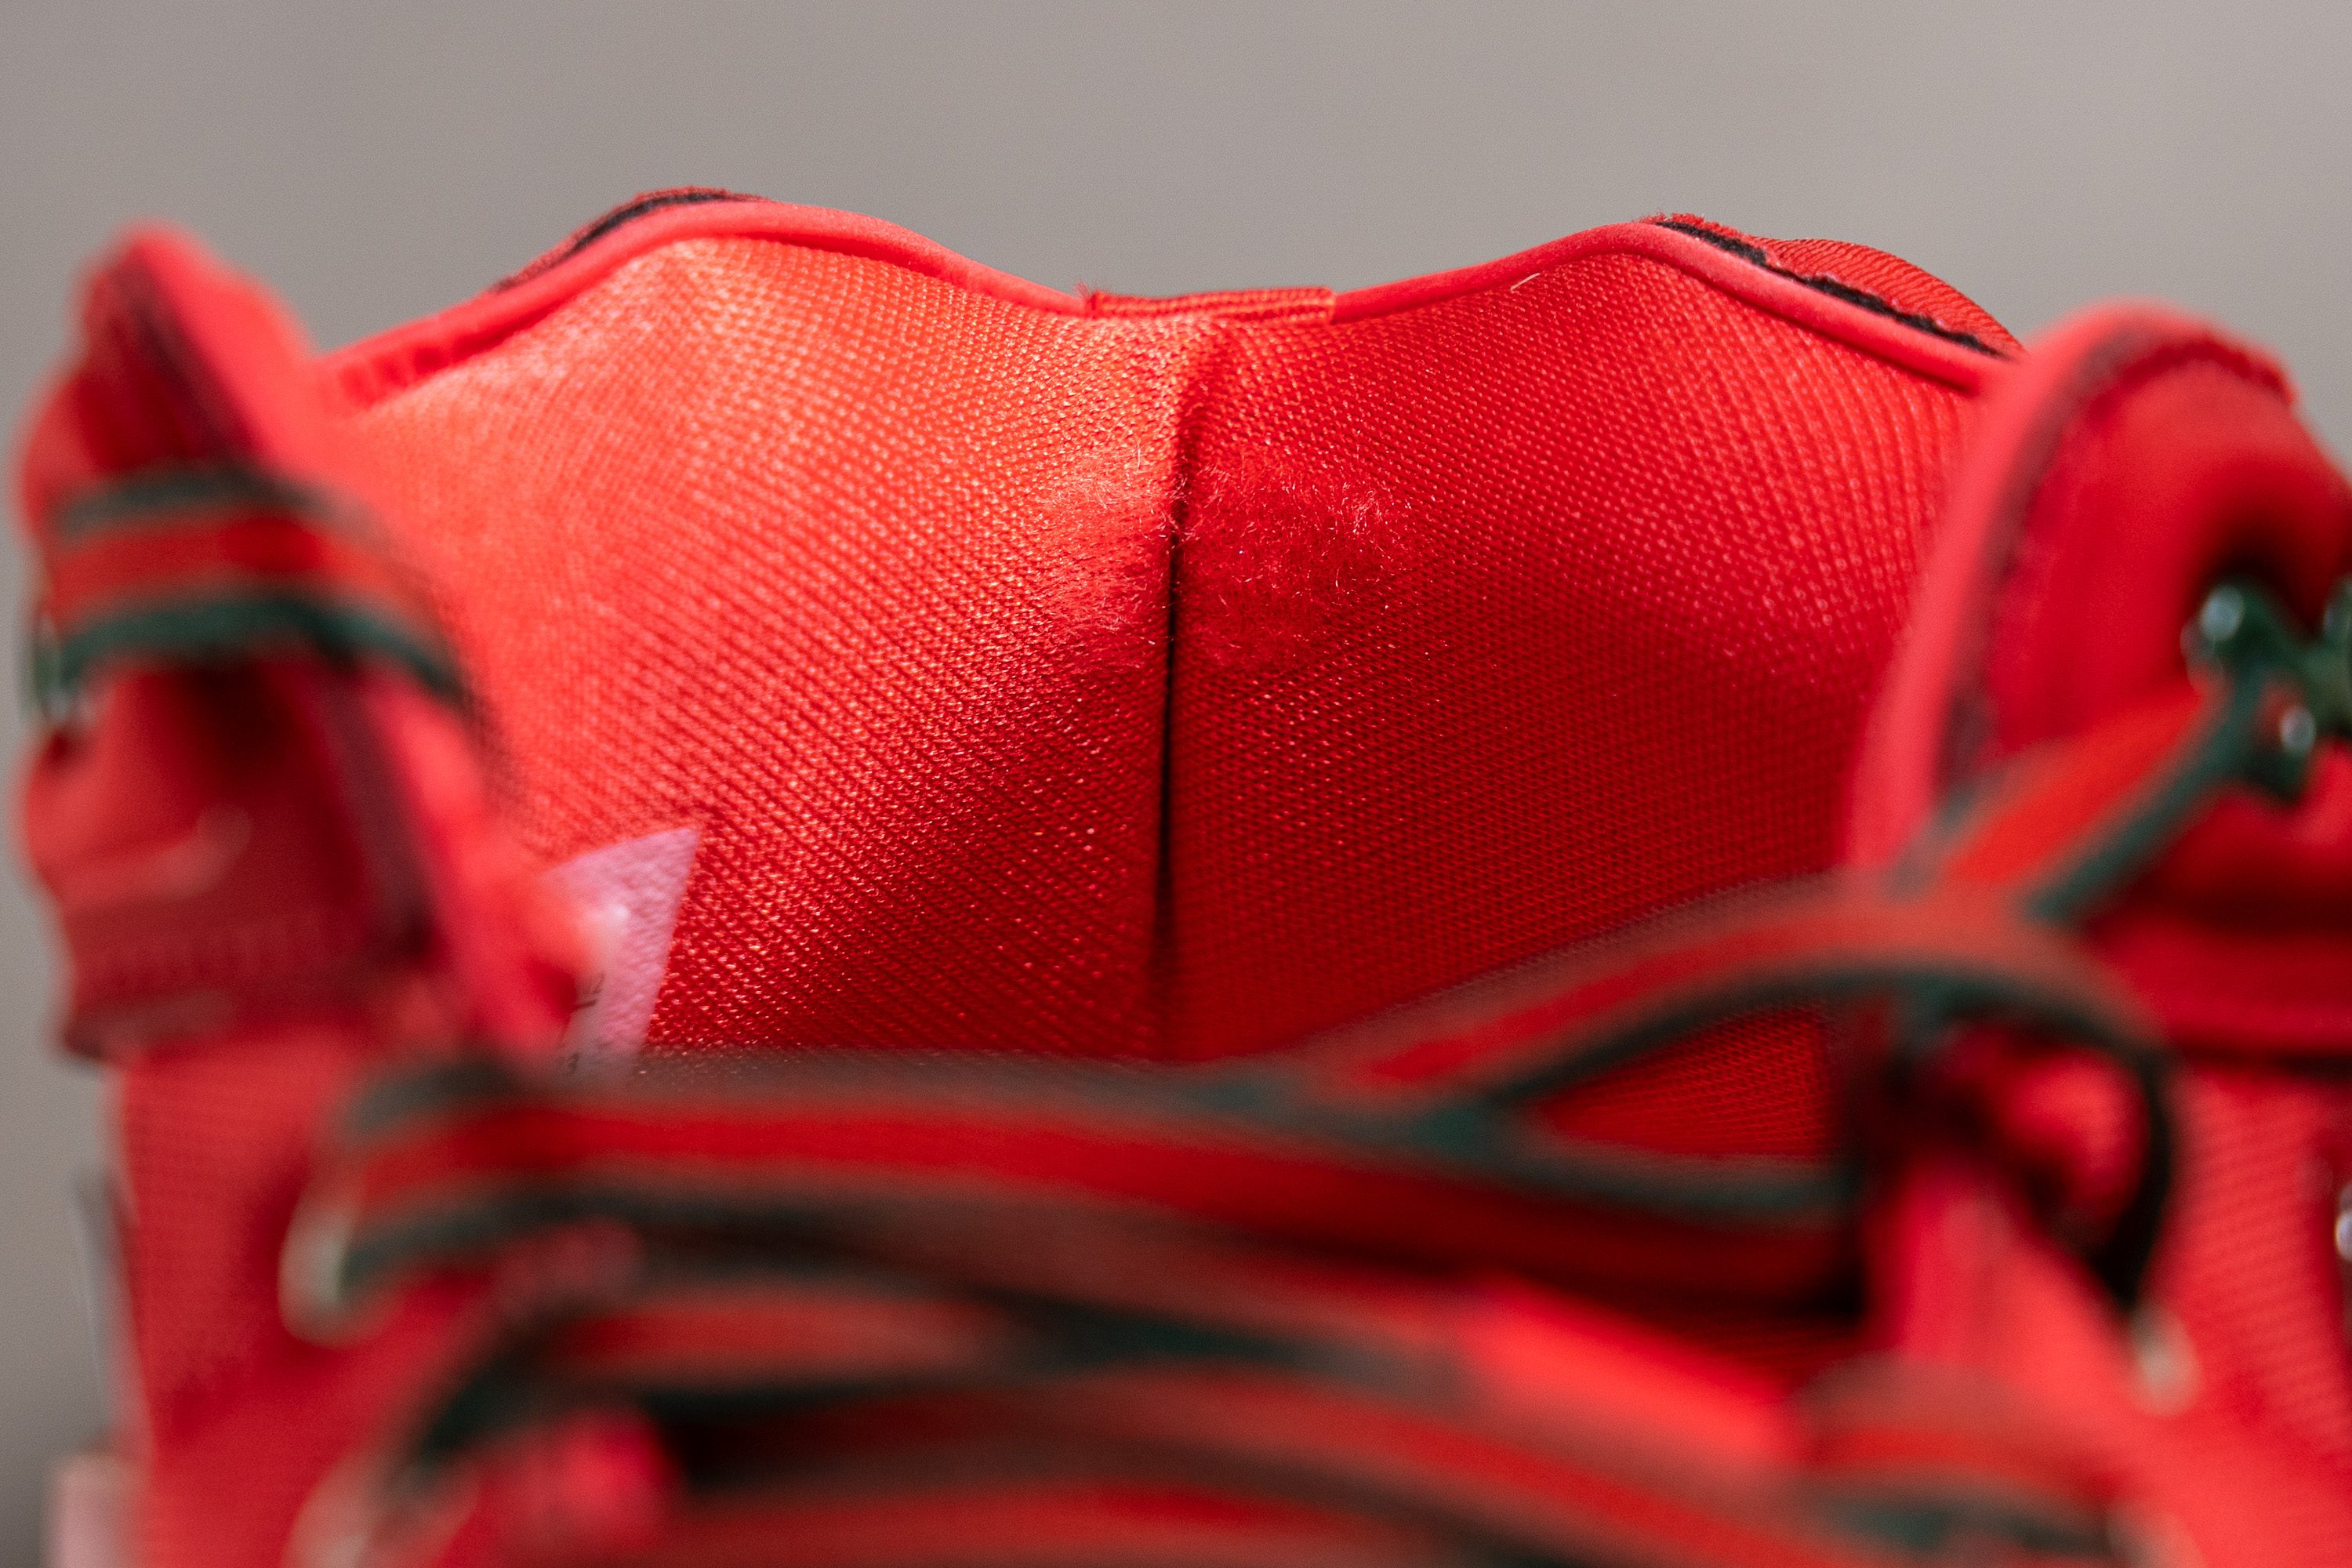 Nike G.T. Hustle 2 Heel padding durability test